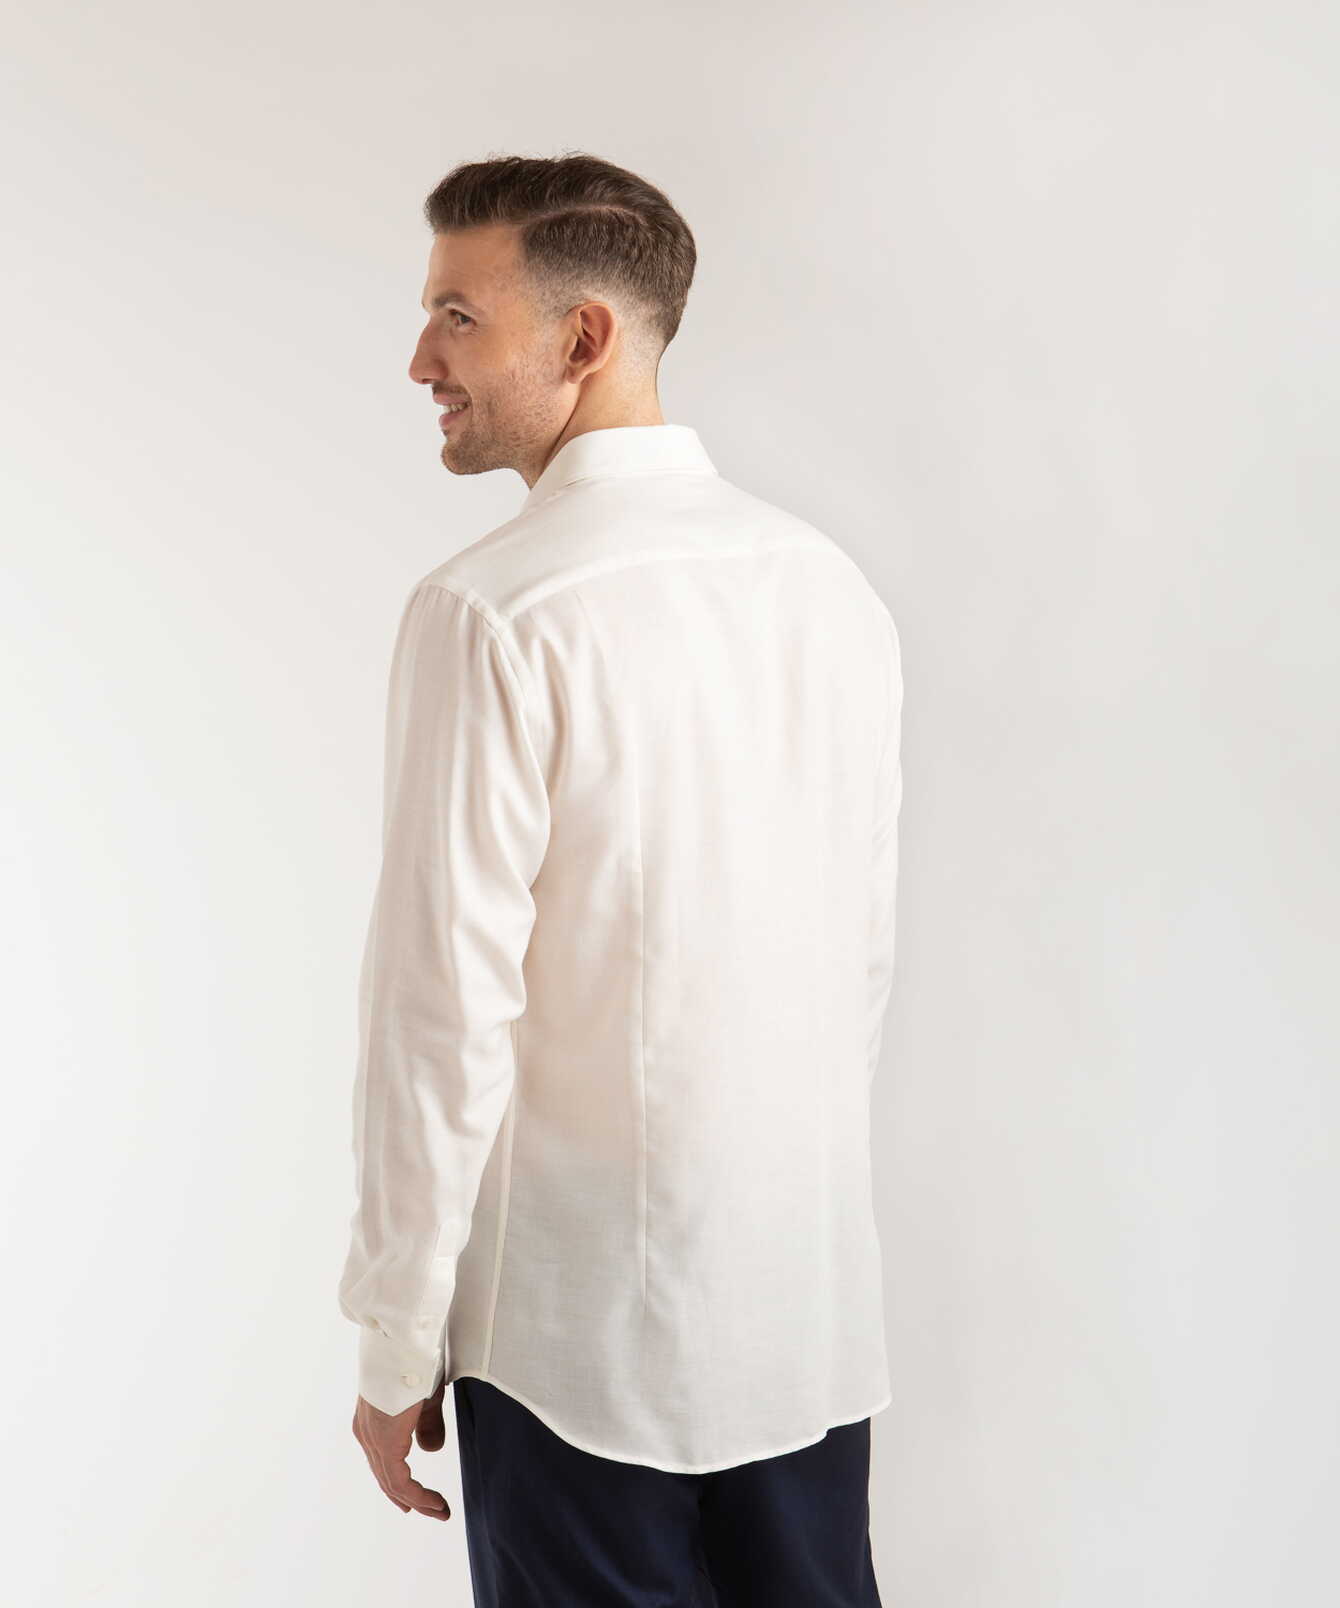 Shirt Rovereto Off White Cashmere Shirt The Shirt Factory